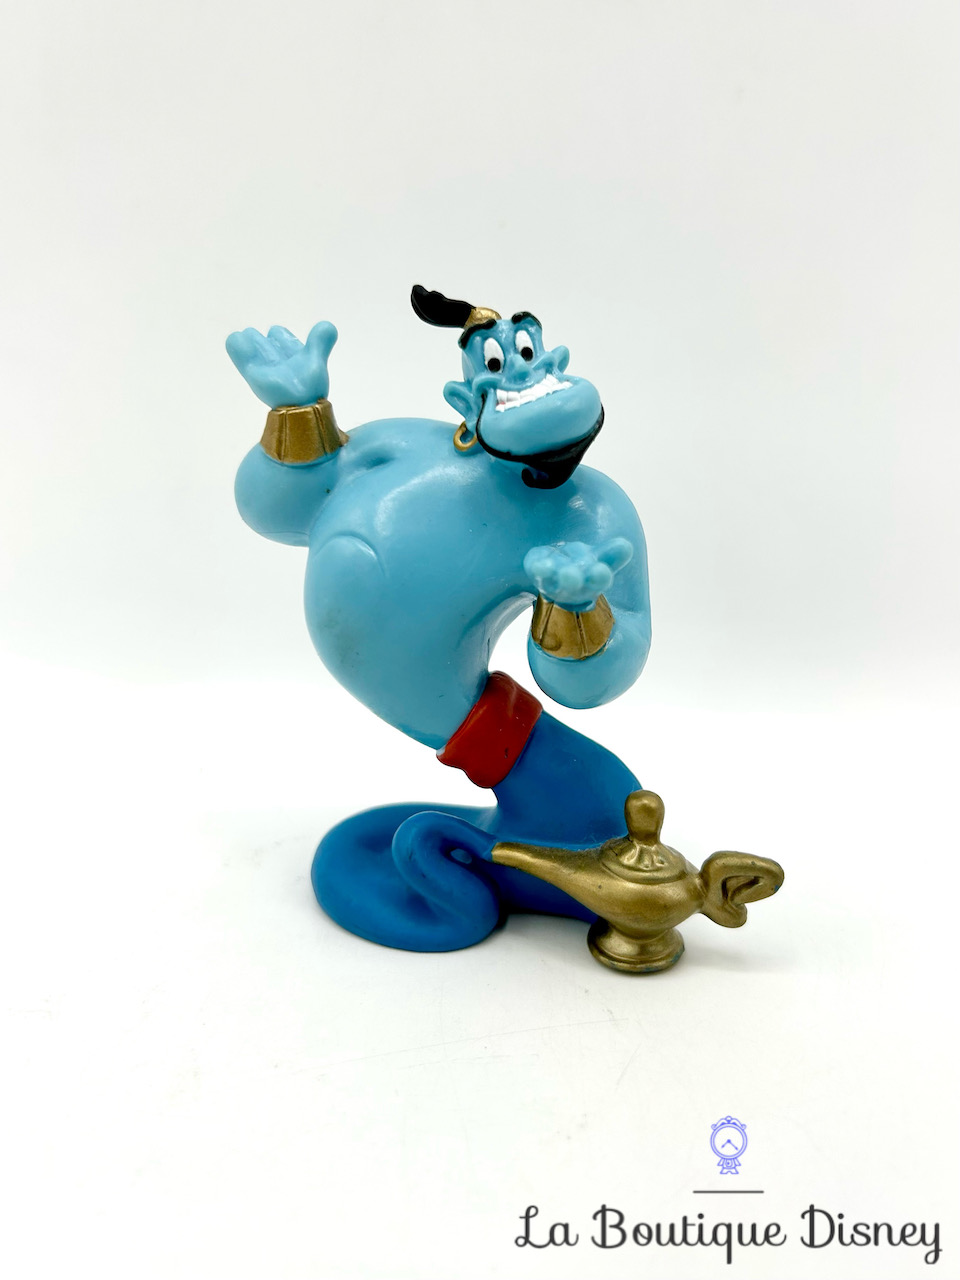 figurine-génie-aladdin-disney-bullyland-bleu-0